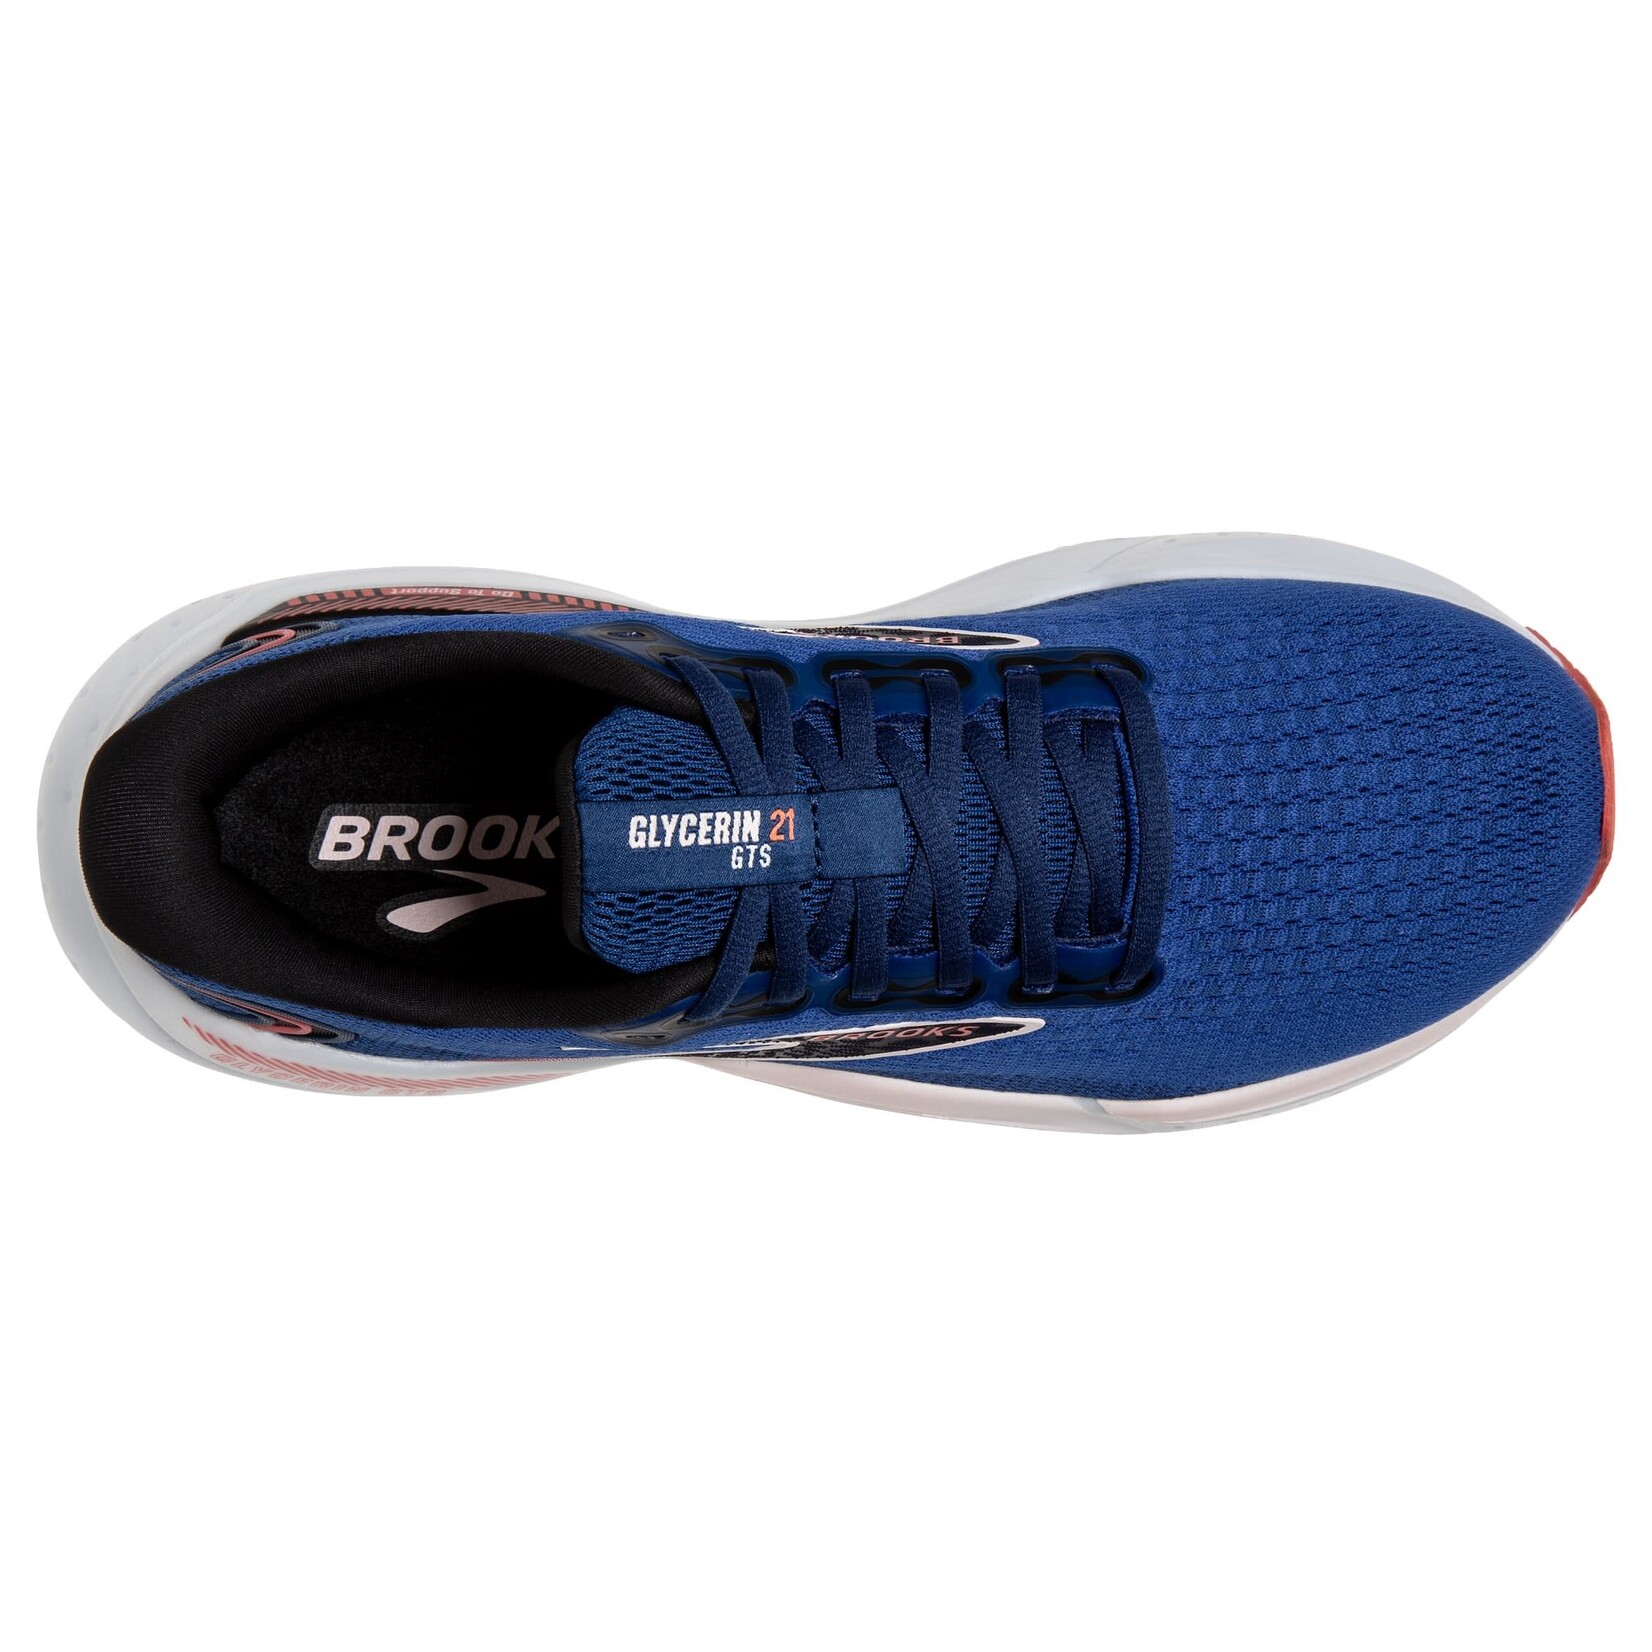 Brooks Brooks Running Shoes, Glycerin GTS 21, Ladies